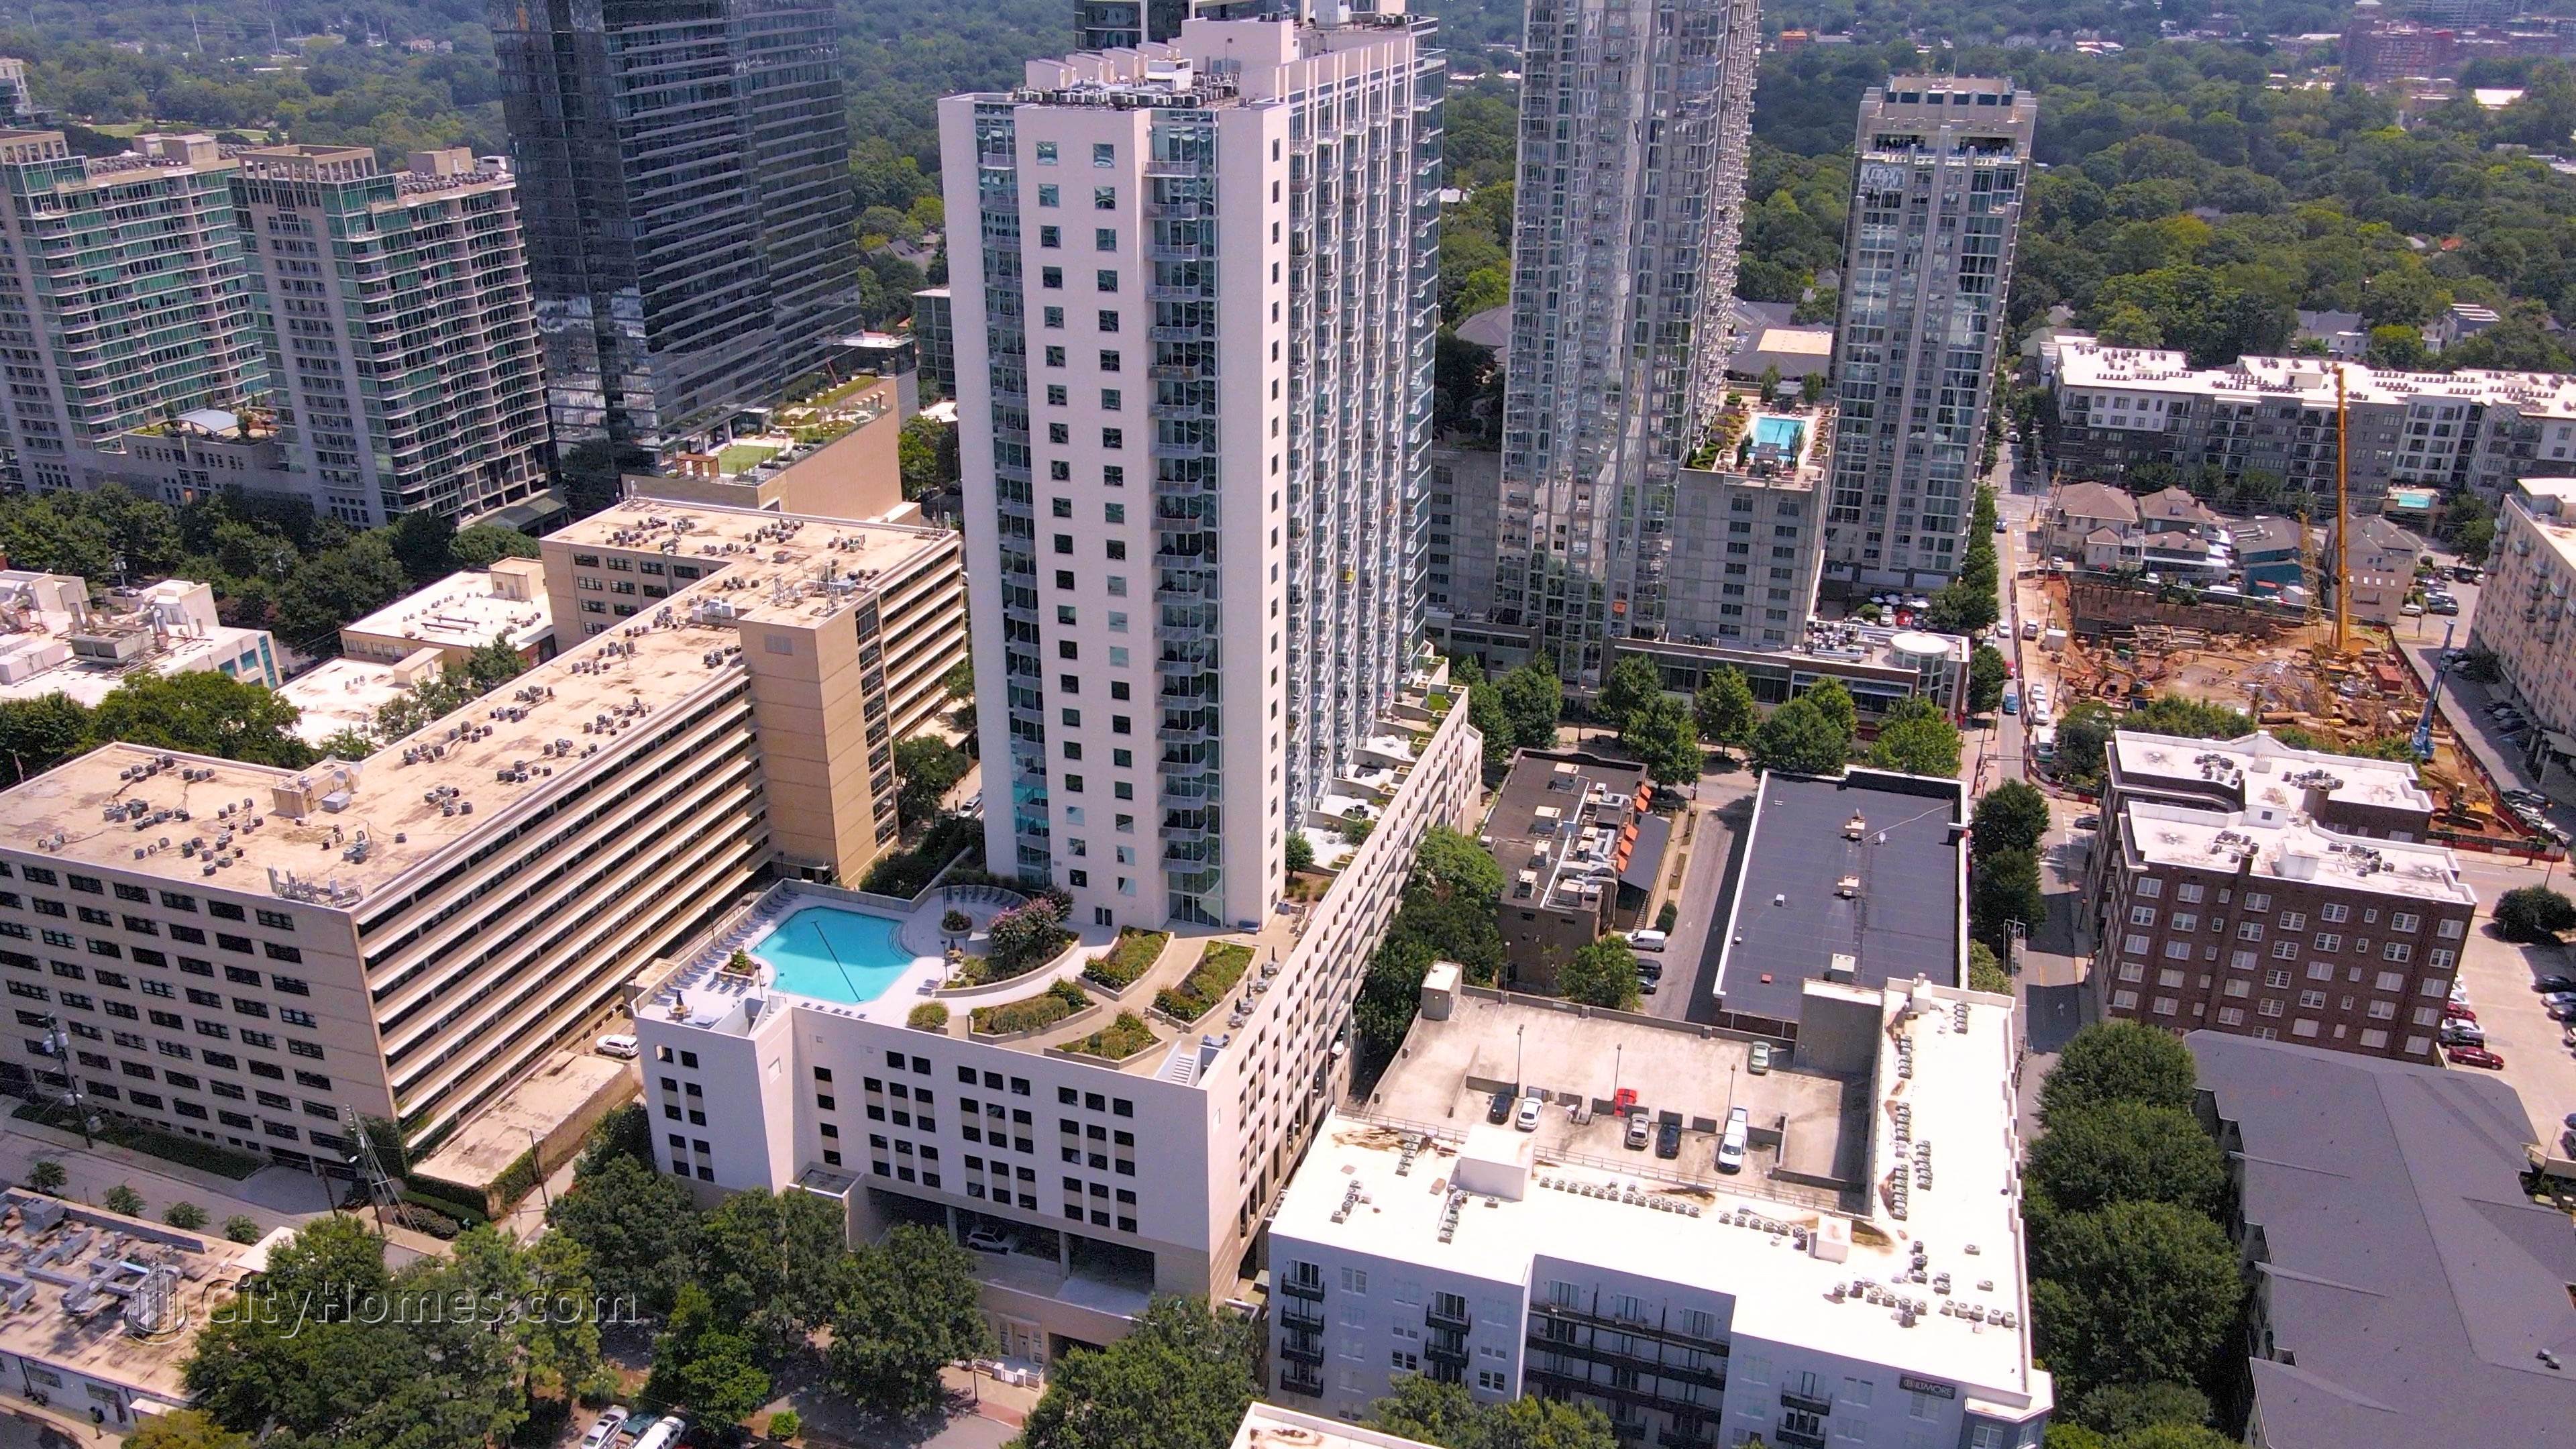 Spire Condominiums xây dựng tại 860 Peachtree St NE, Greater Midtown, Atlanta, GA 30308